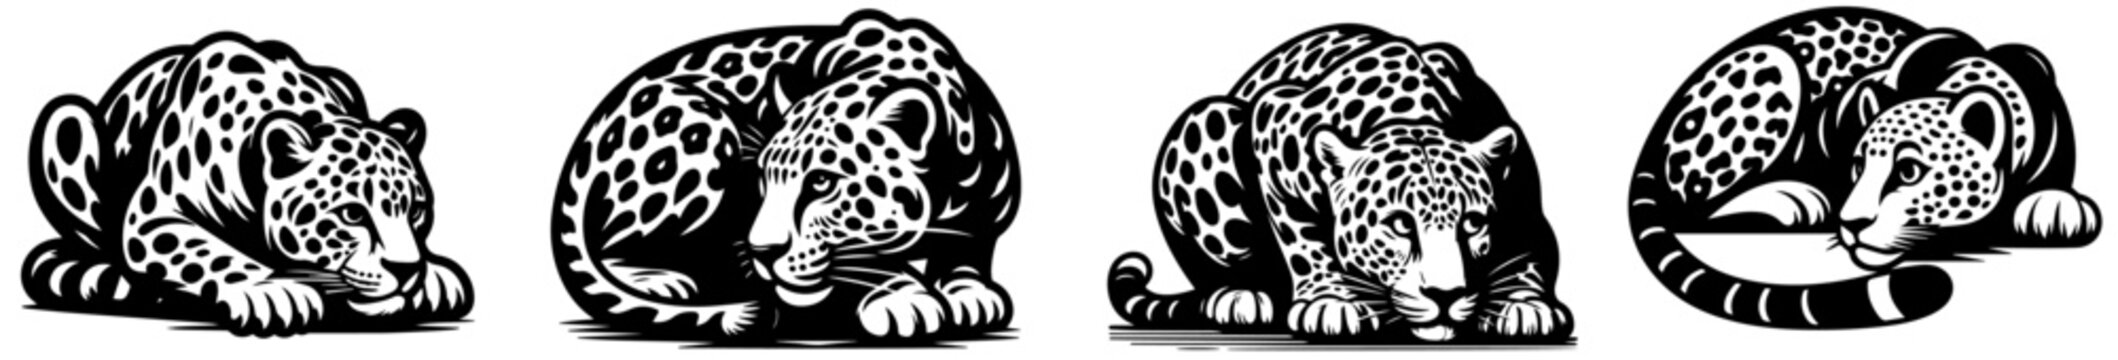 spotted puma, black animal shape silhouette vector, monochrome print clipart illustration, laser cutting engraving nocolor